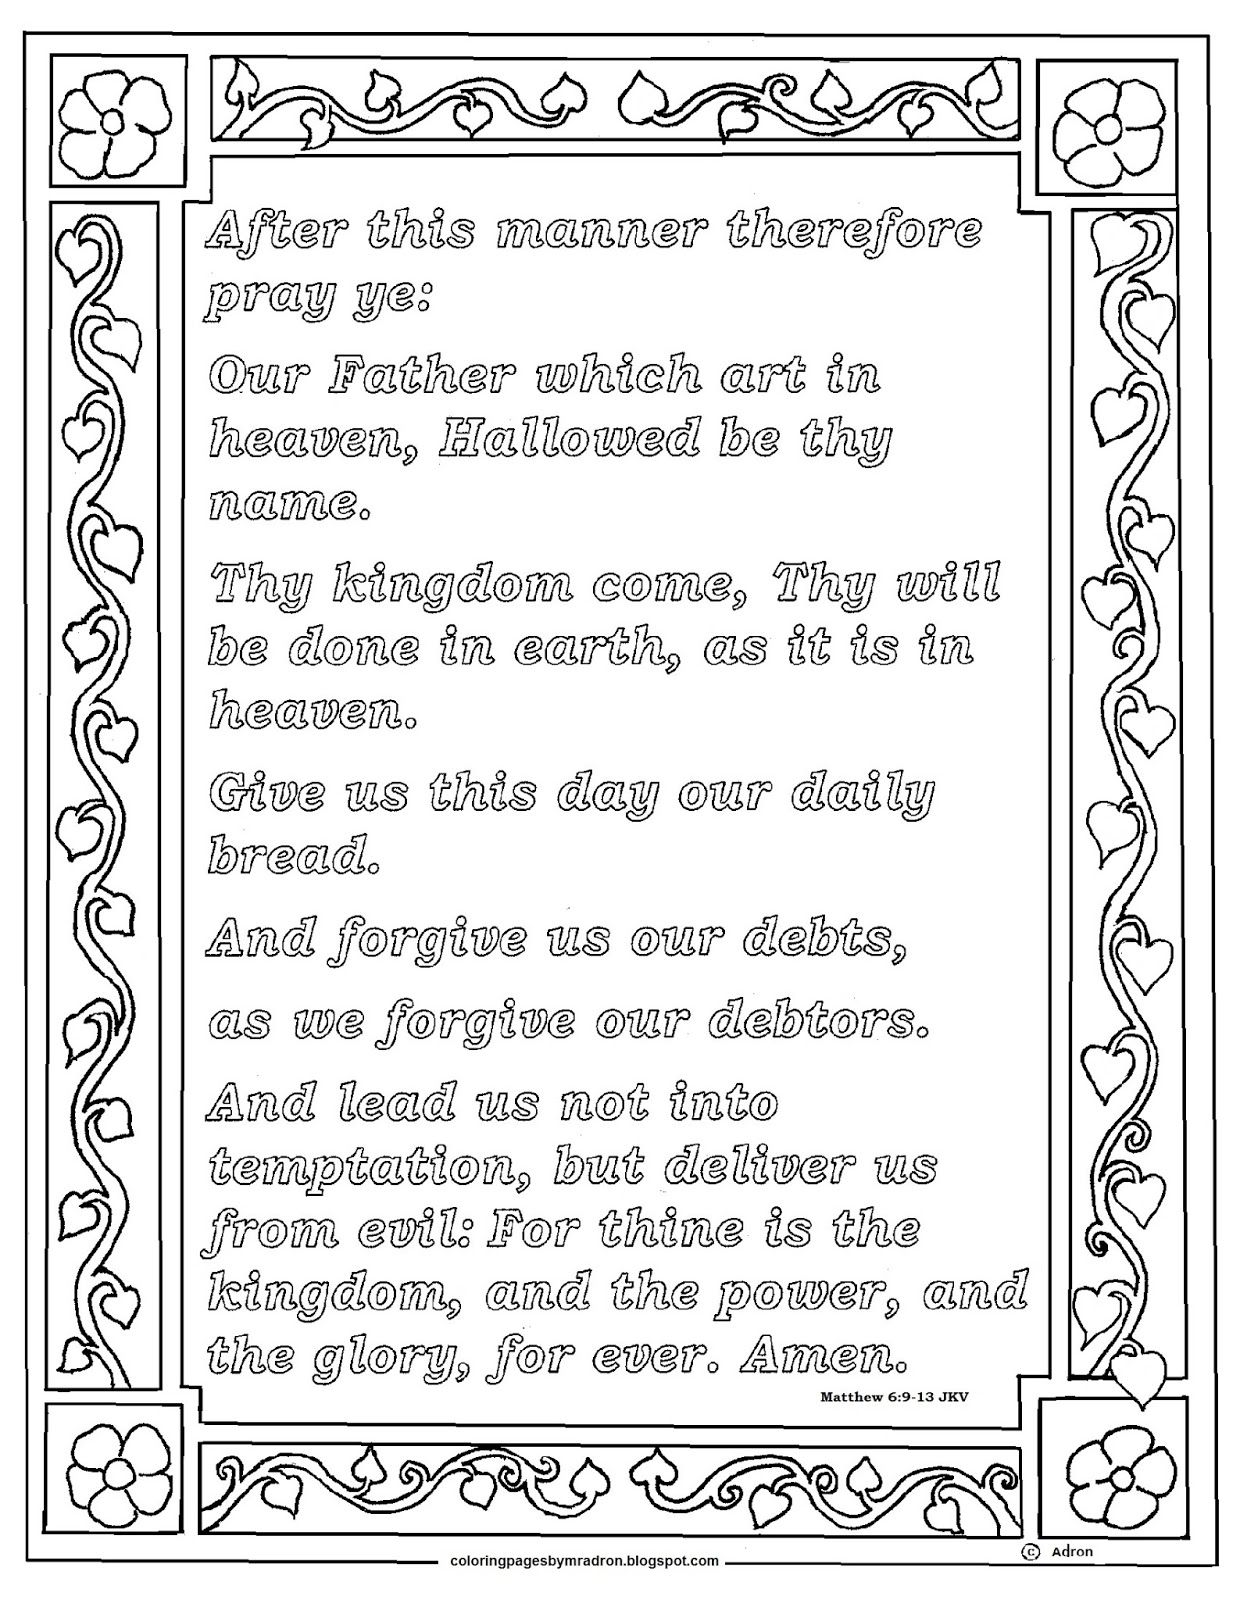 the lord's prayer kjv printable - PrintableTemplates